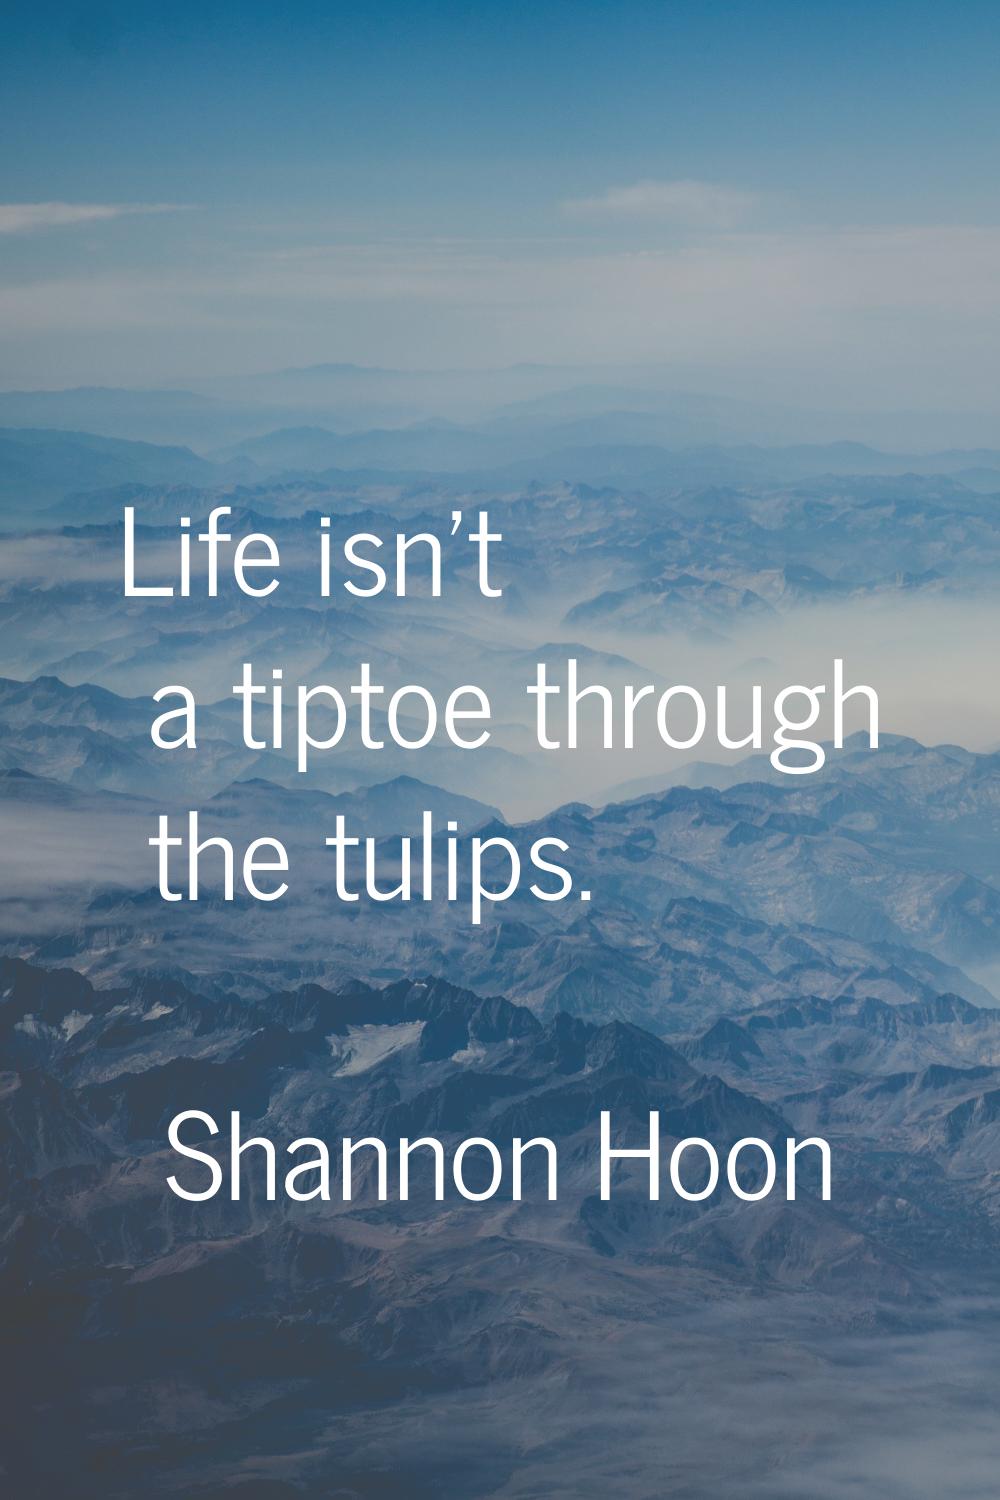 Life isn't a tiptoe through the tulips.